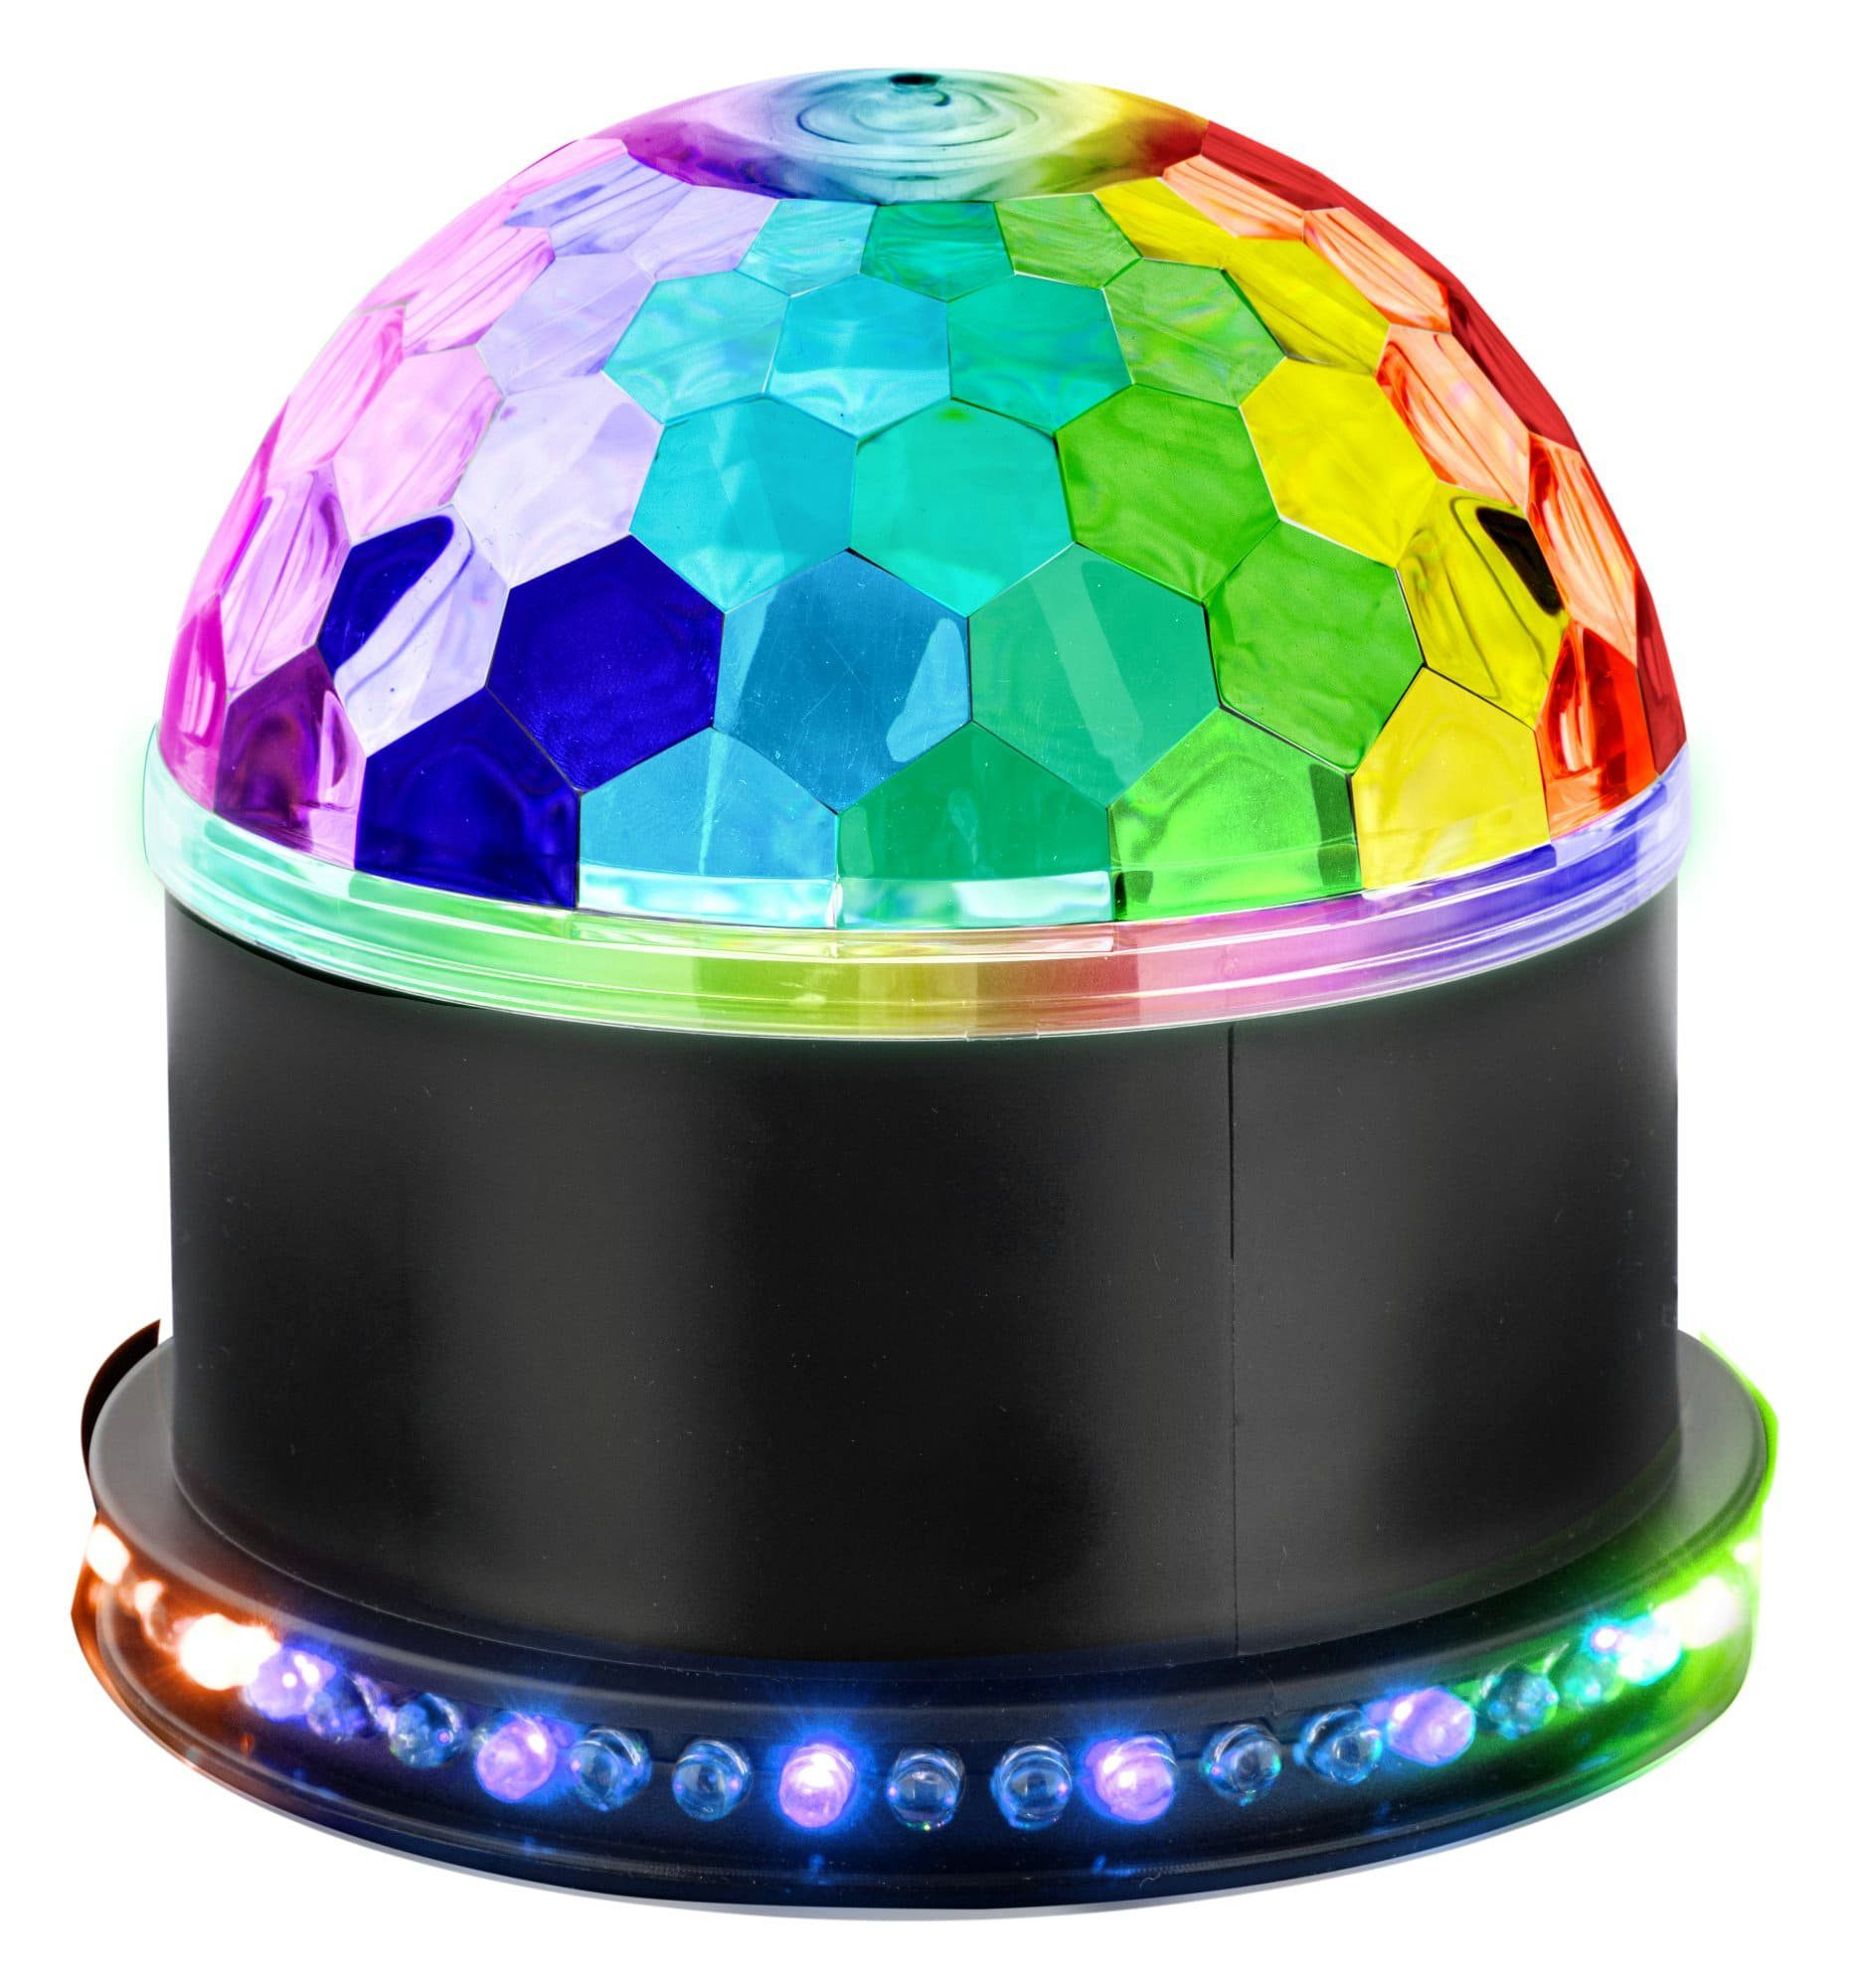 Mini-Party-Ball, integriert, Bar, fest DJs LED Party, Discolicht PBM-9 Discokugel Showlite LED kleine für mobile Farbwechsler,